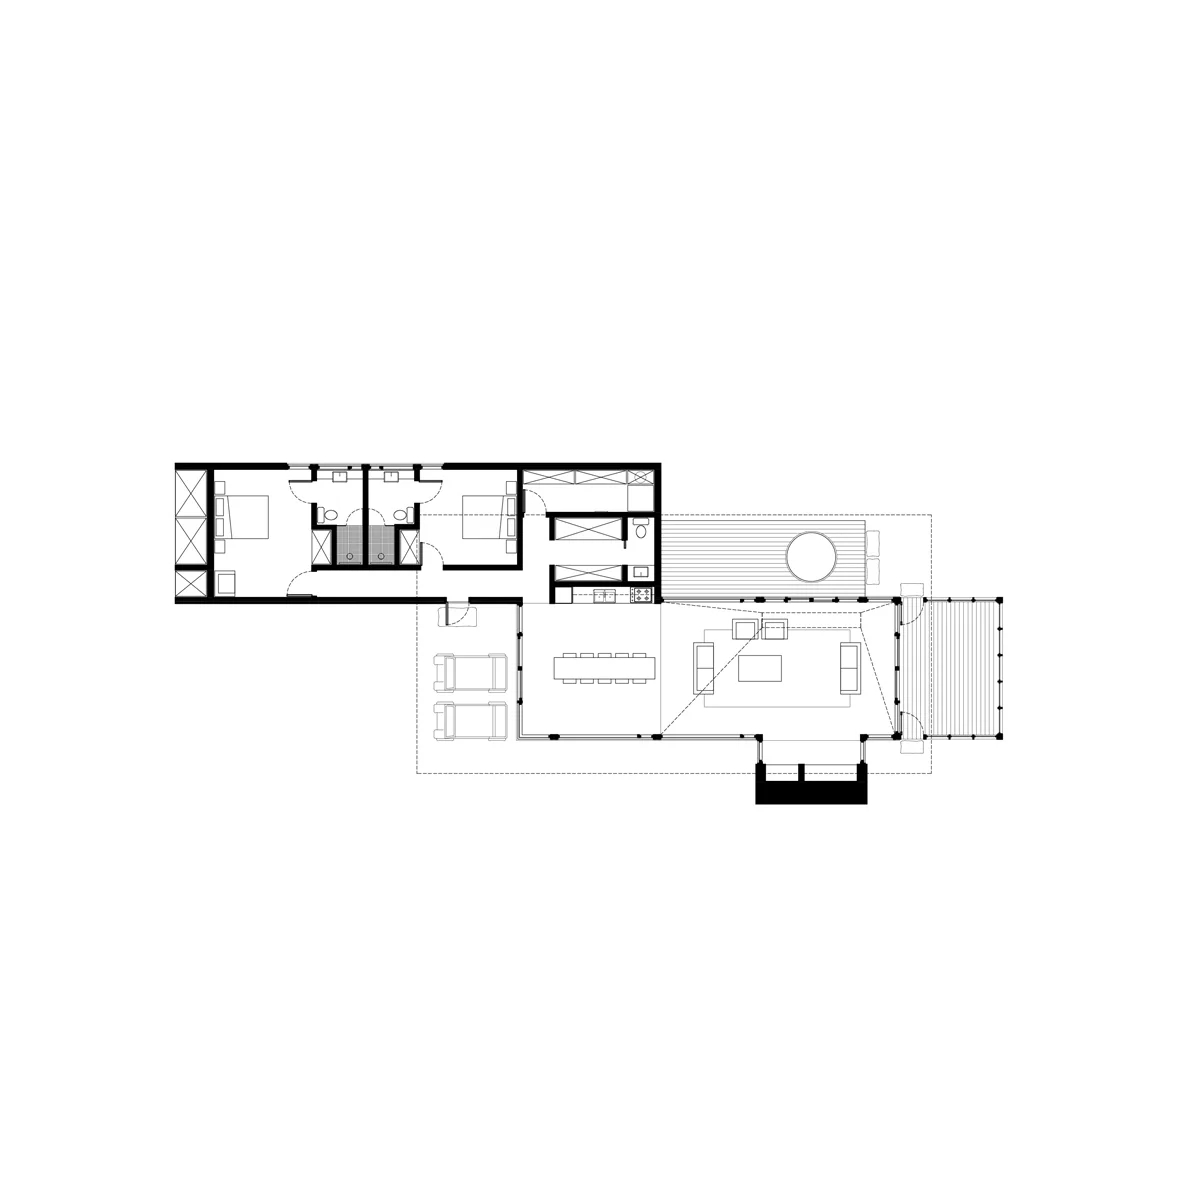 mackay-lyons-sweetapple-architects-bigwin-island-club-cabins-designboom-017.webp.jpg